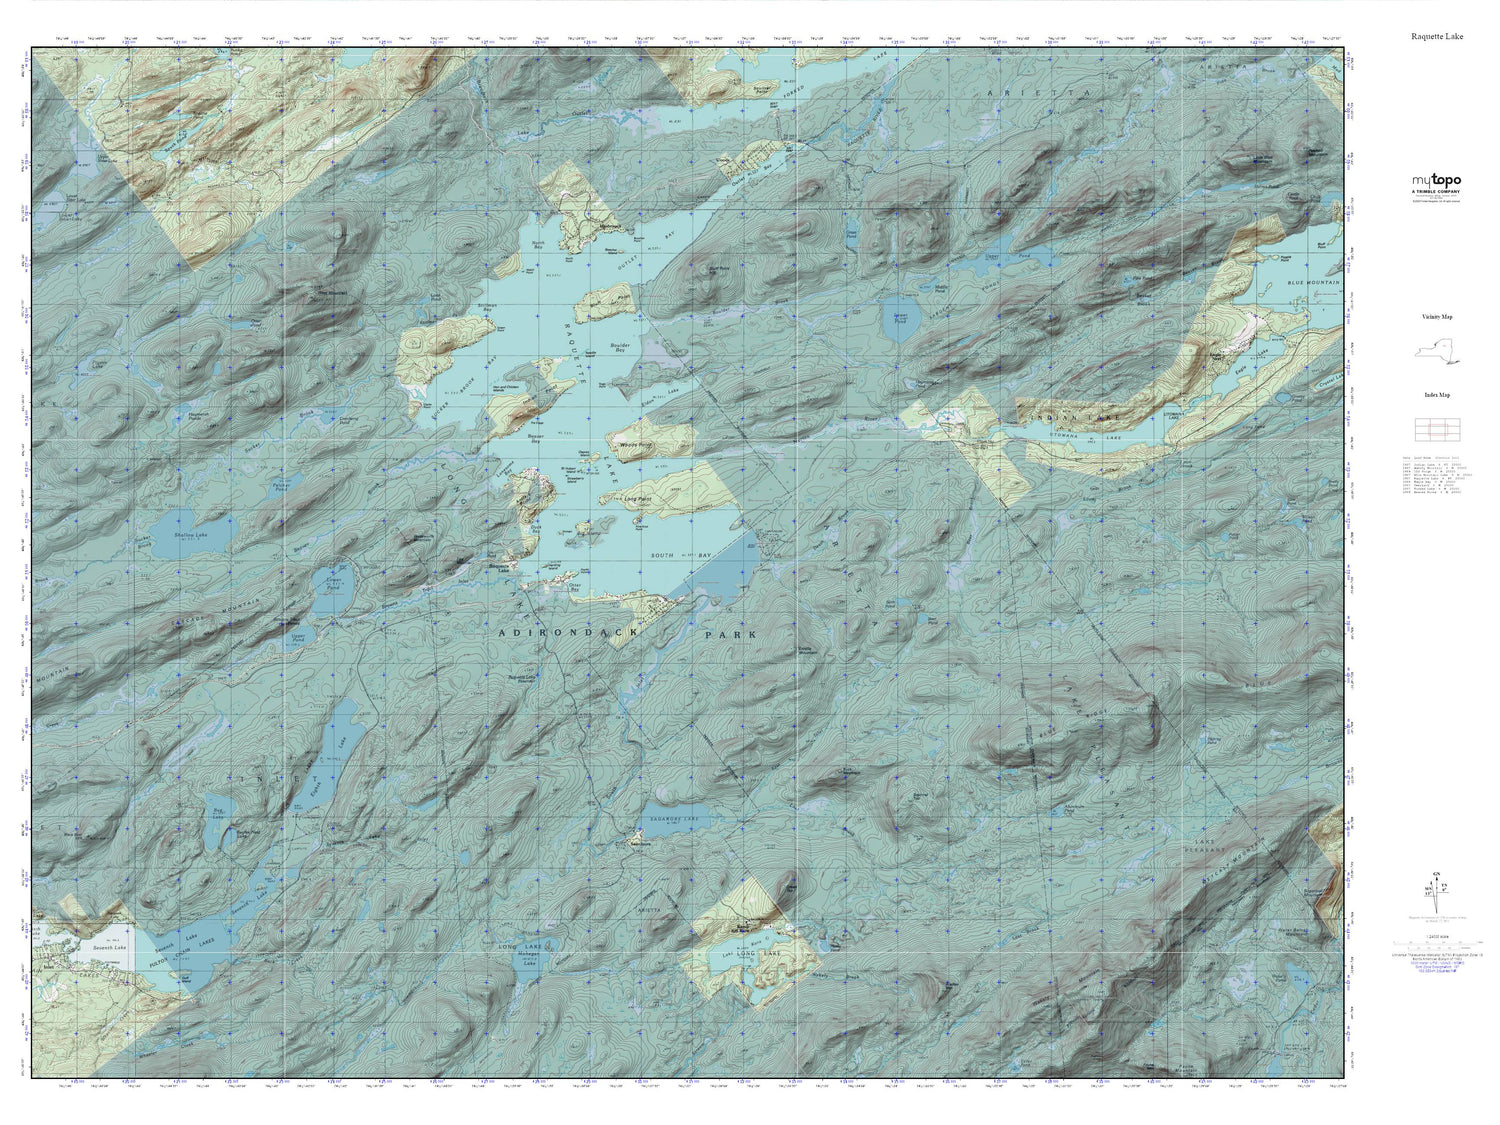 Raquette Lake MyTopo Explorer Series Map Image